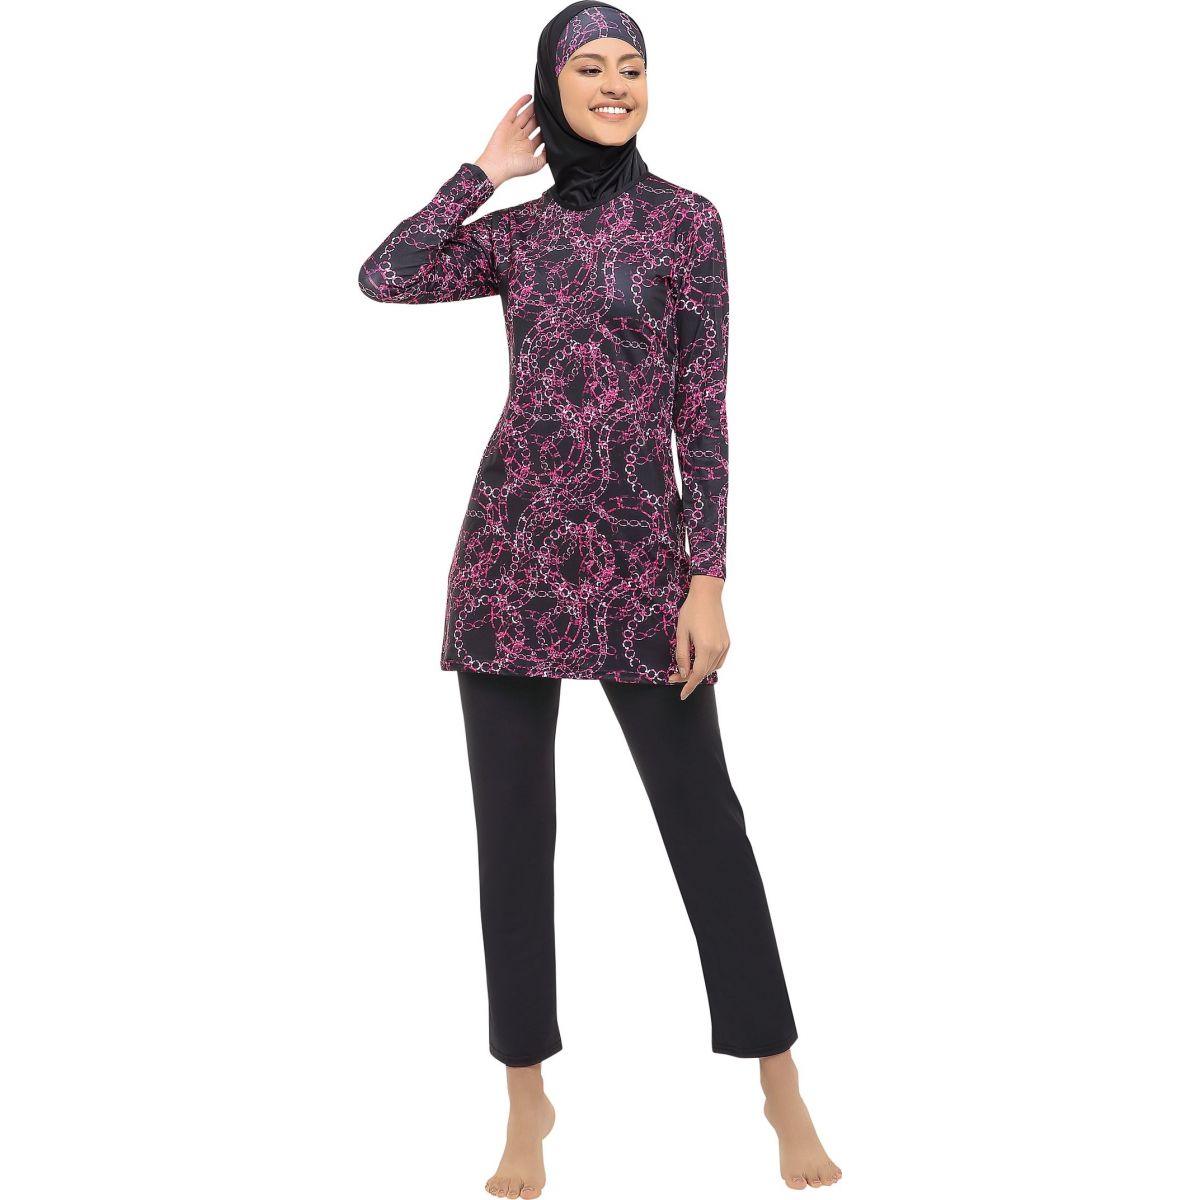 Argisa 7540 Long Sleeve Chain Patterned Full Hijab Swimwear 36-52 Plus Size Muslim Hijab Islamic Swimsuit Burkini Turkey Cover